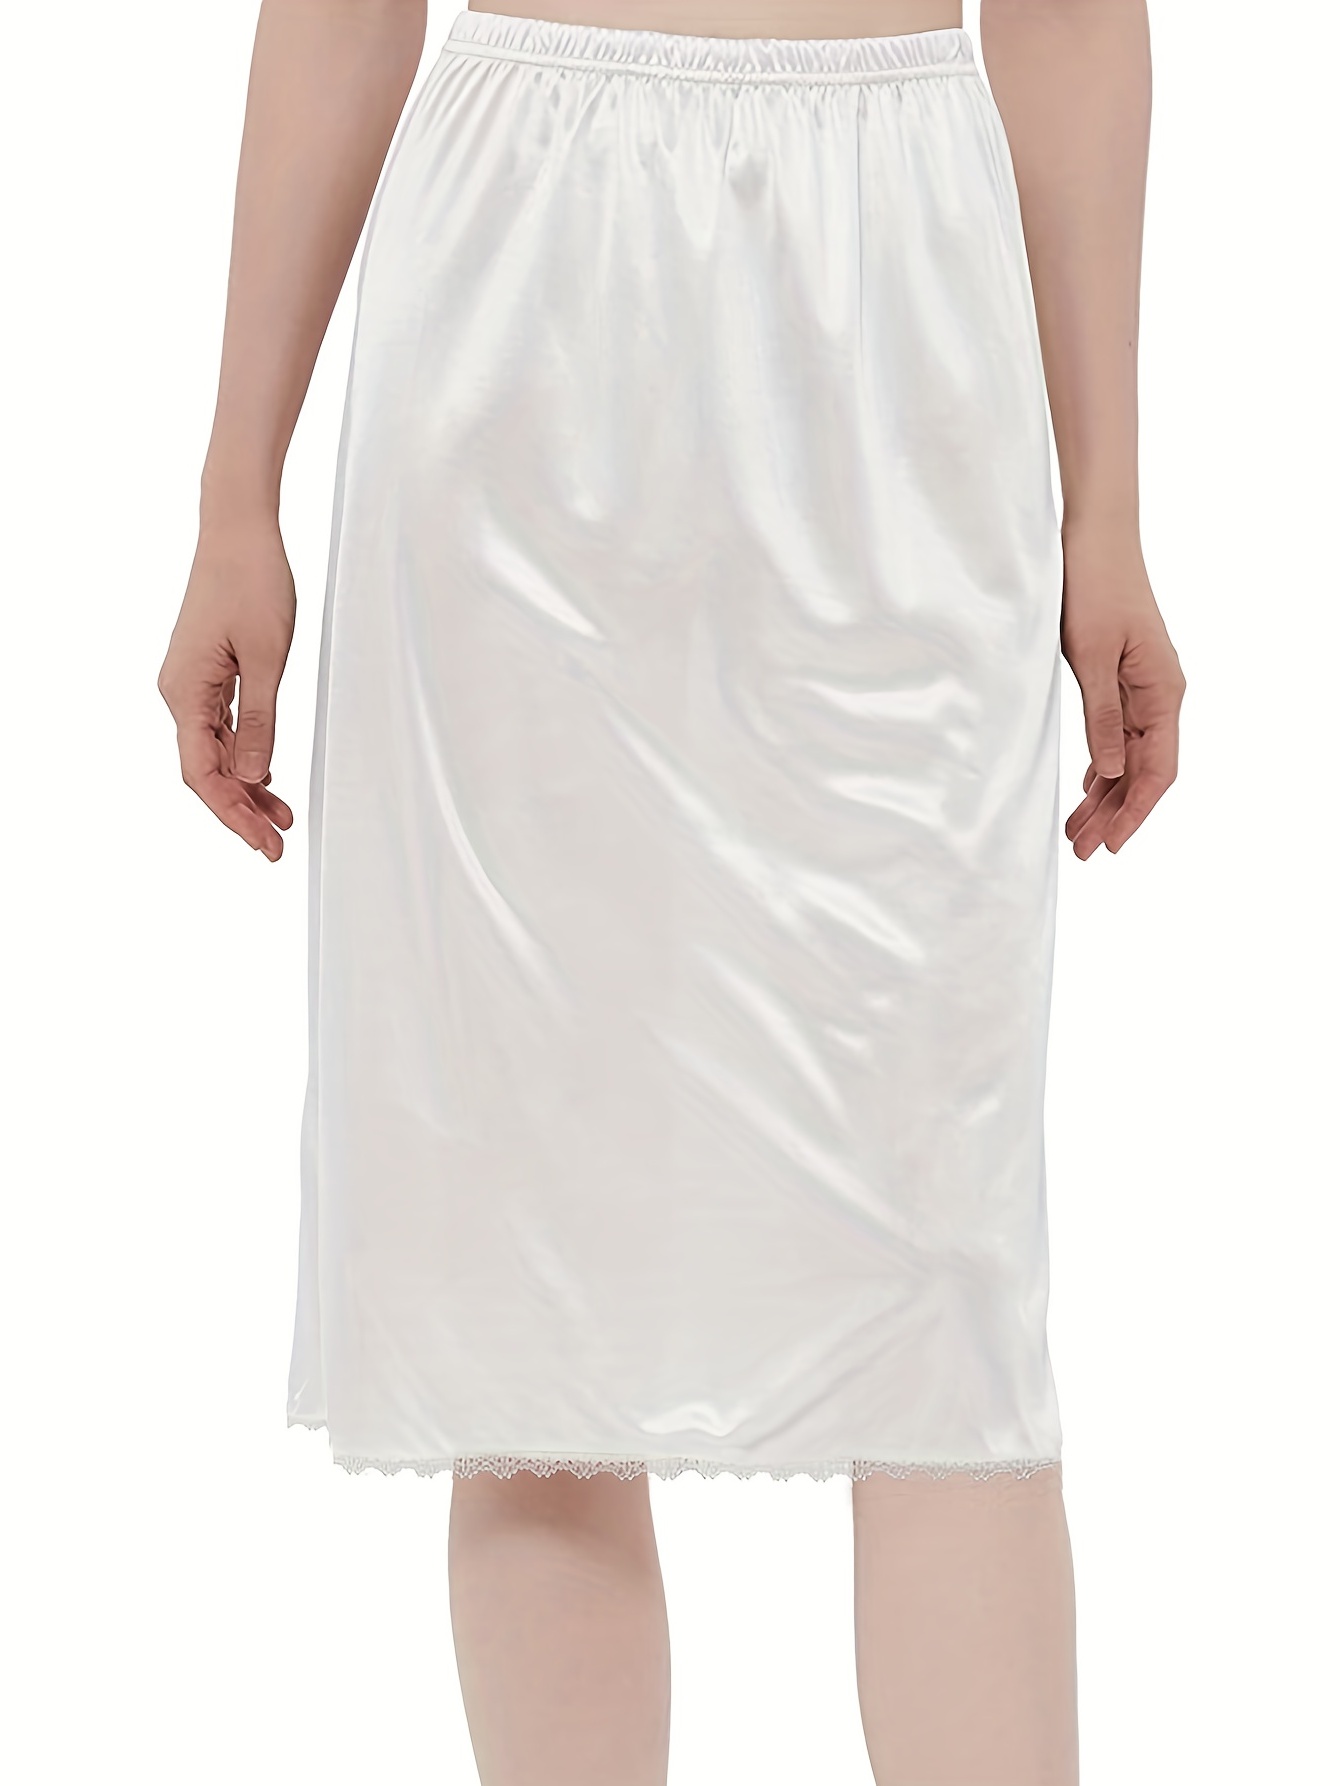 Lace Trim Solid Skirt, Sexy Mid Rise Stretch Half Slips Petticoat, Women's  Underwear & Shapewear